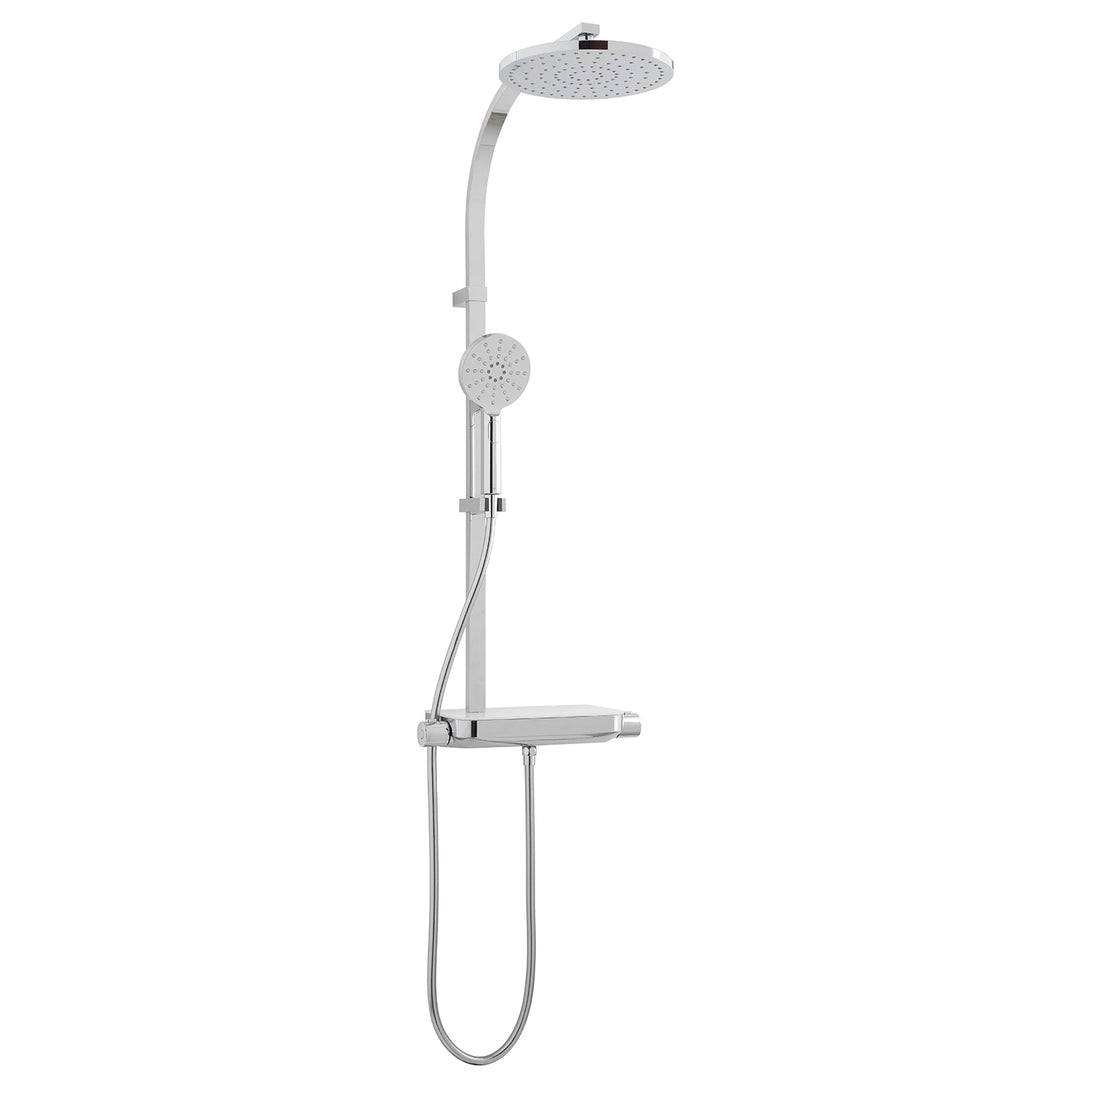 Vado Strata showering column with thermostatic shower shelf valve